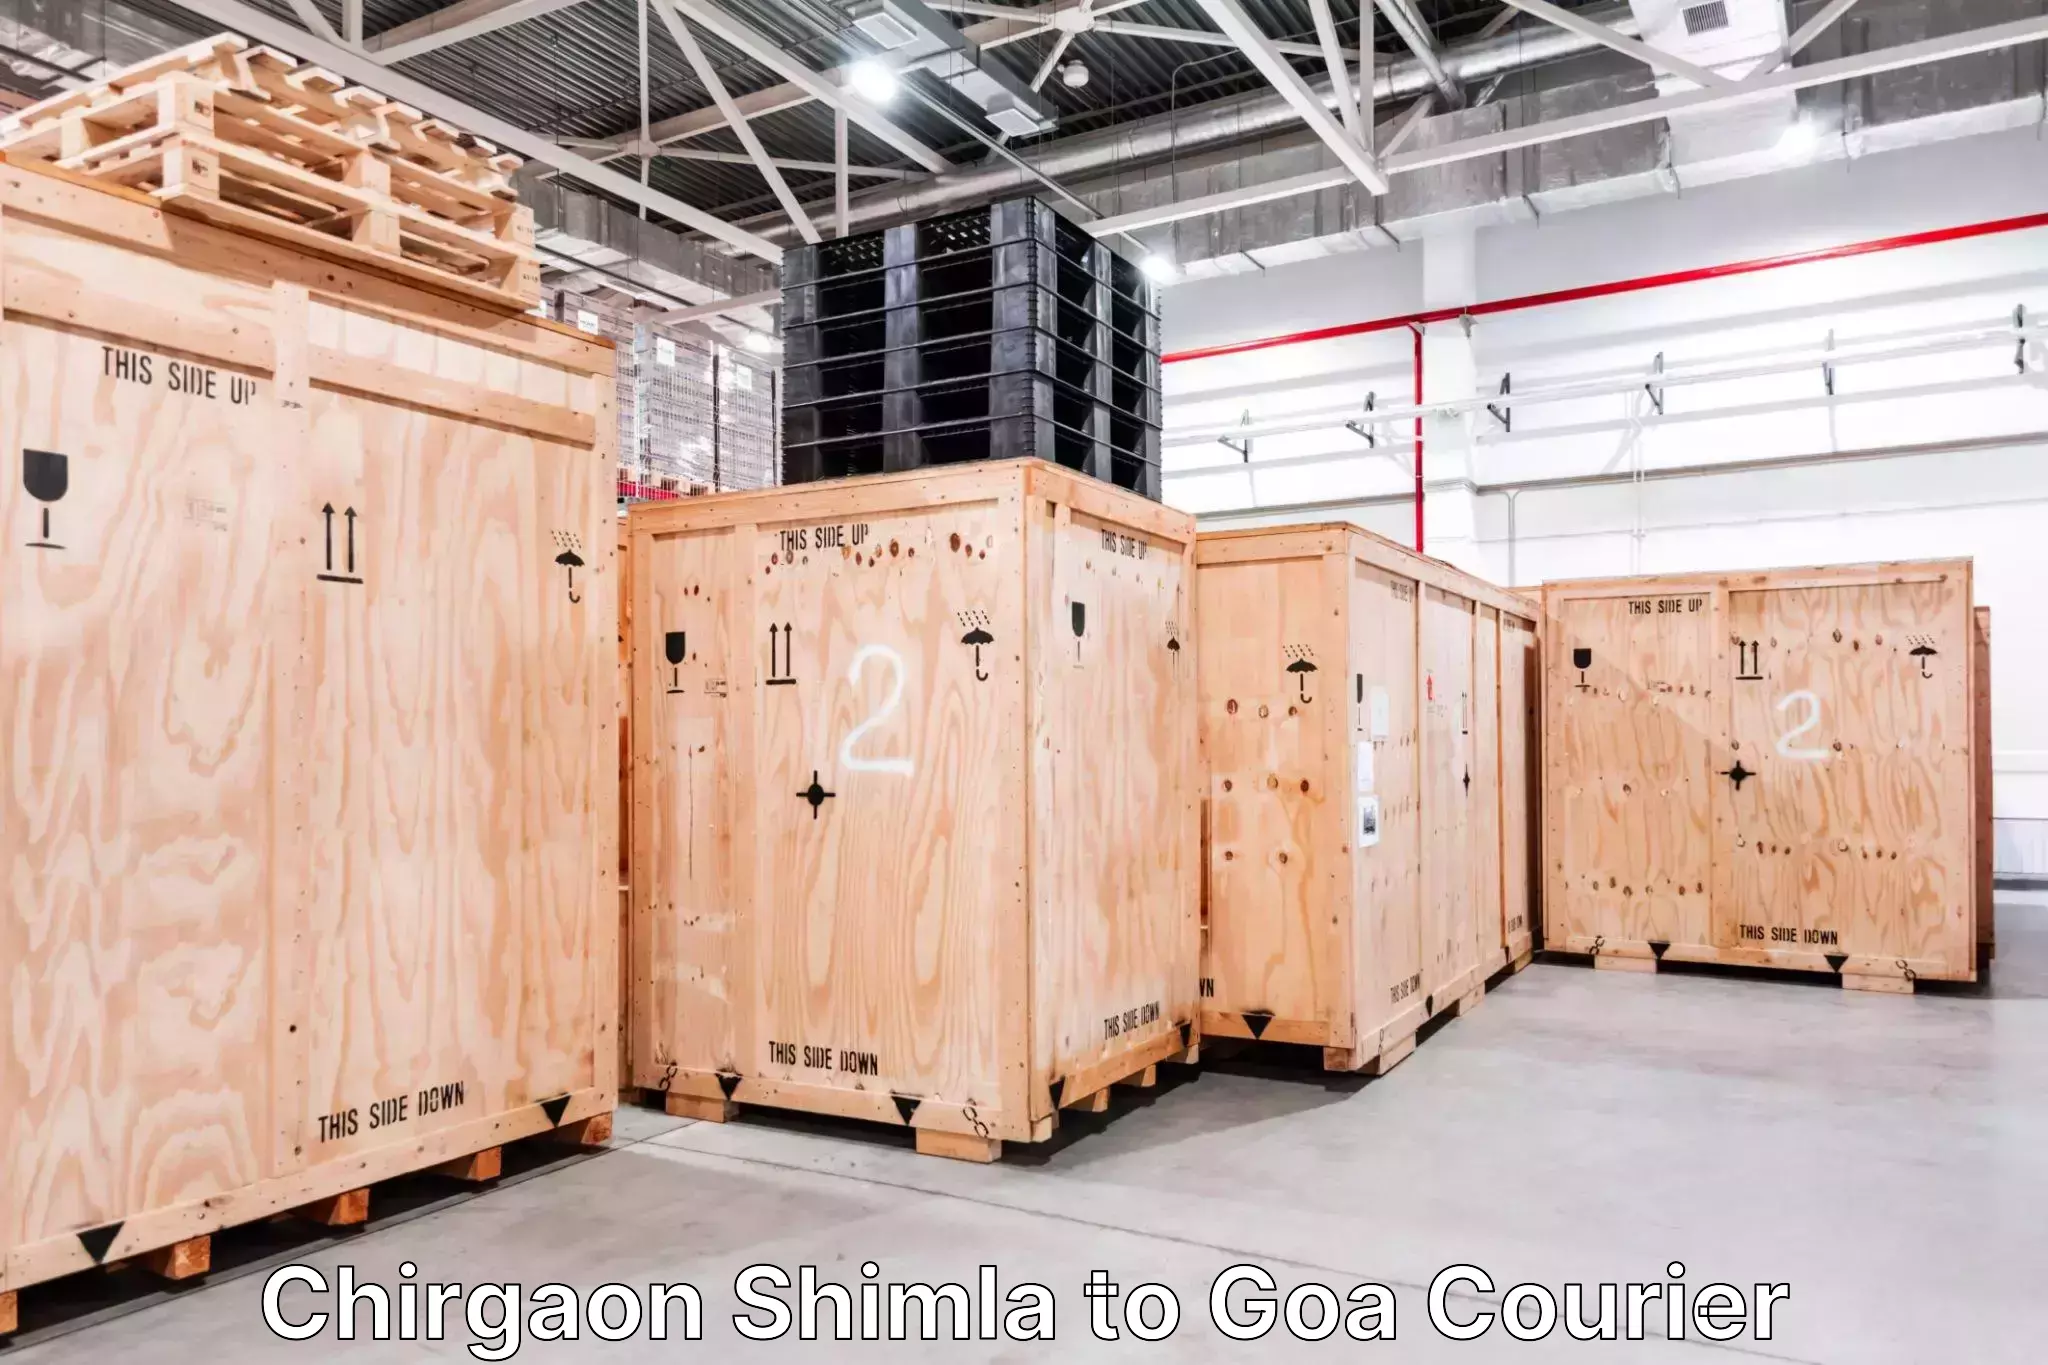 Luggage delivery network Chirgaon Shimla to Goa